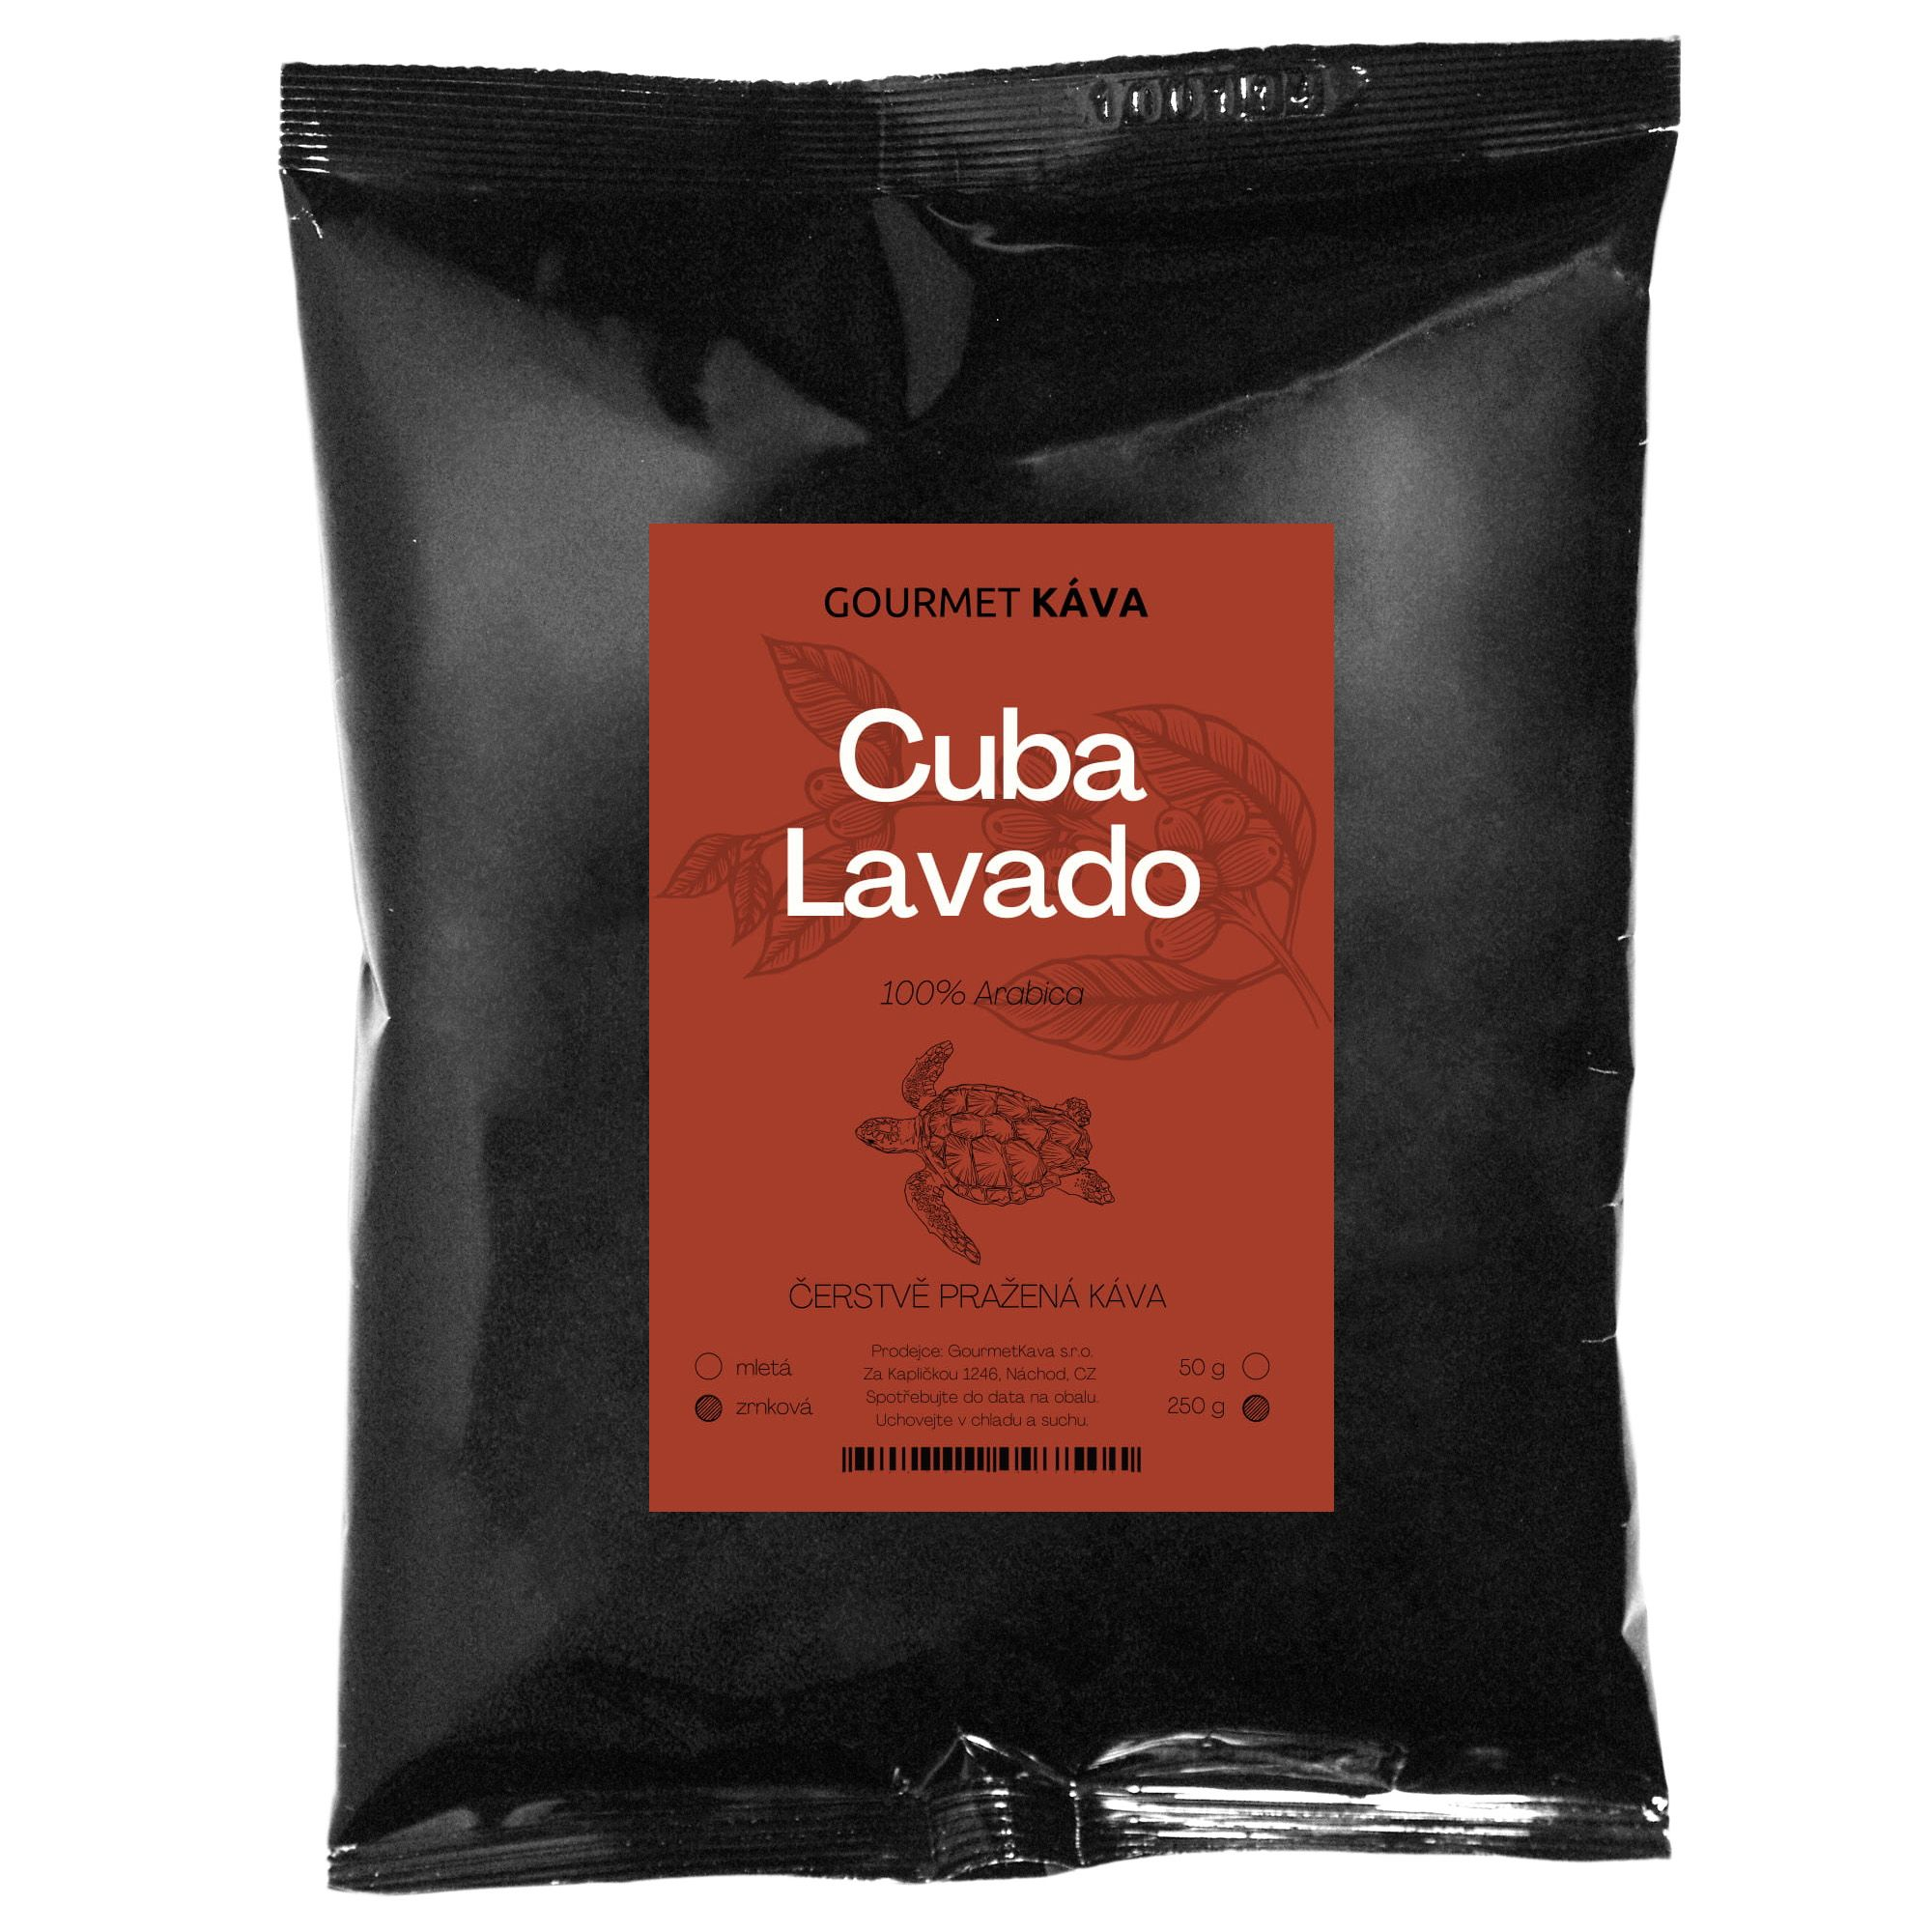 Kuba Lavado, Arabica coffee beans